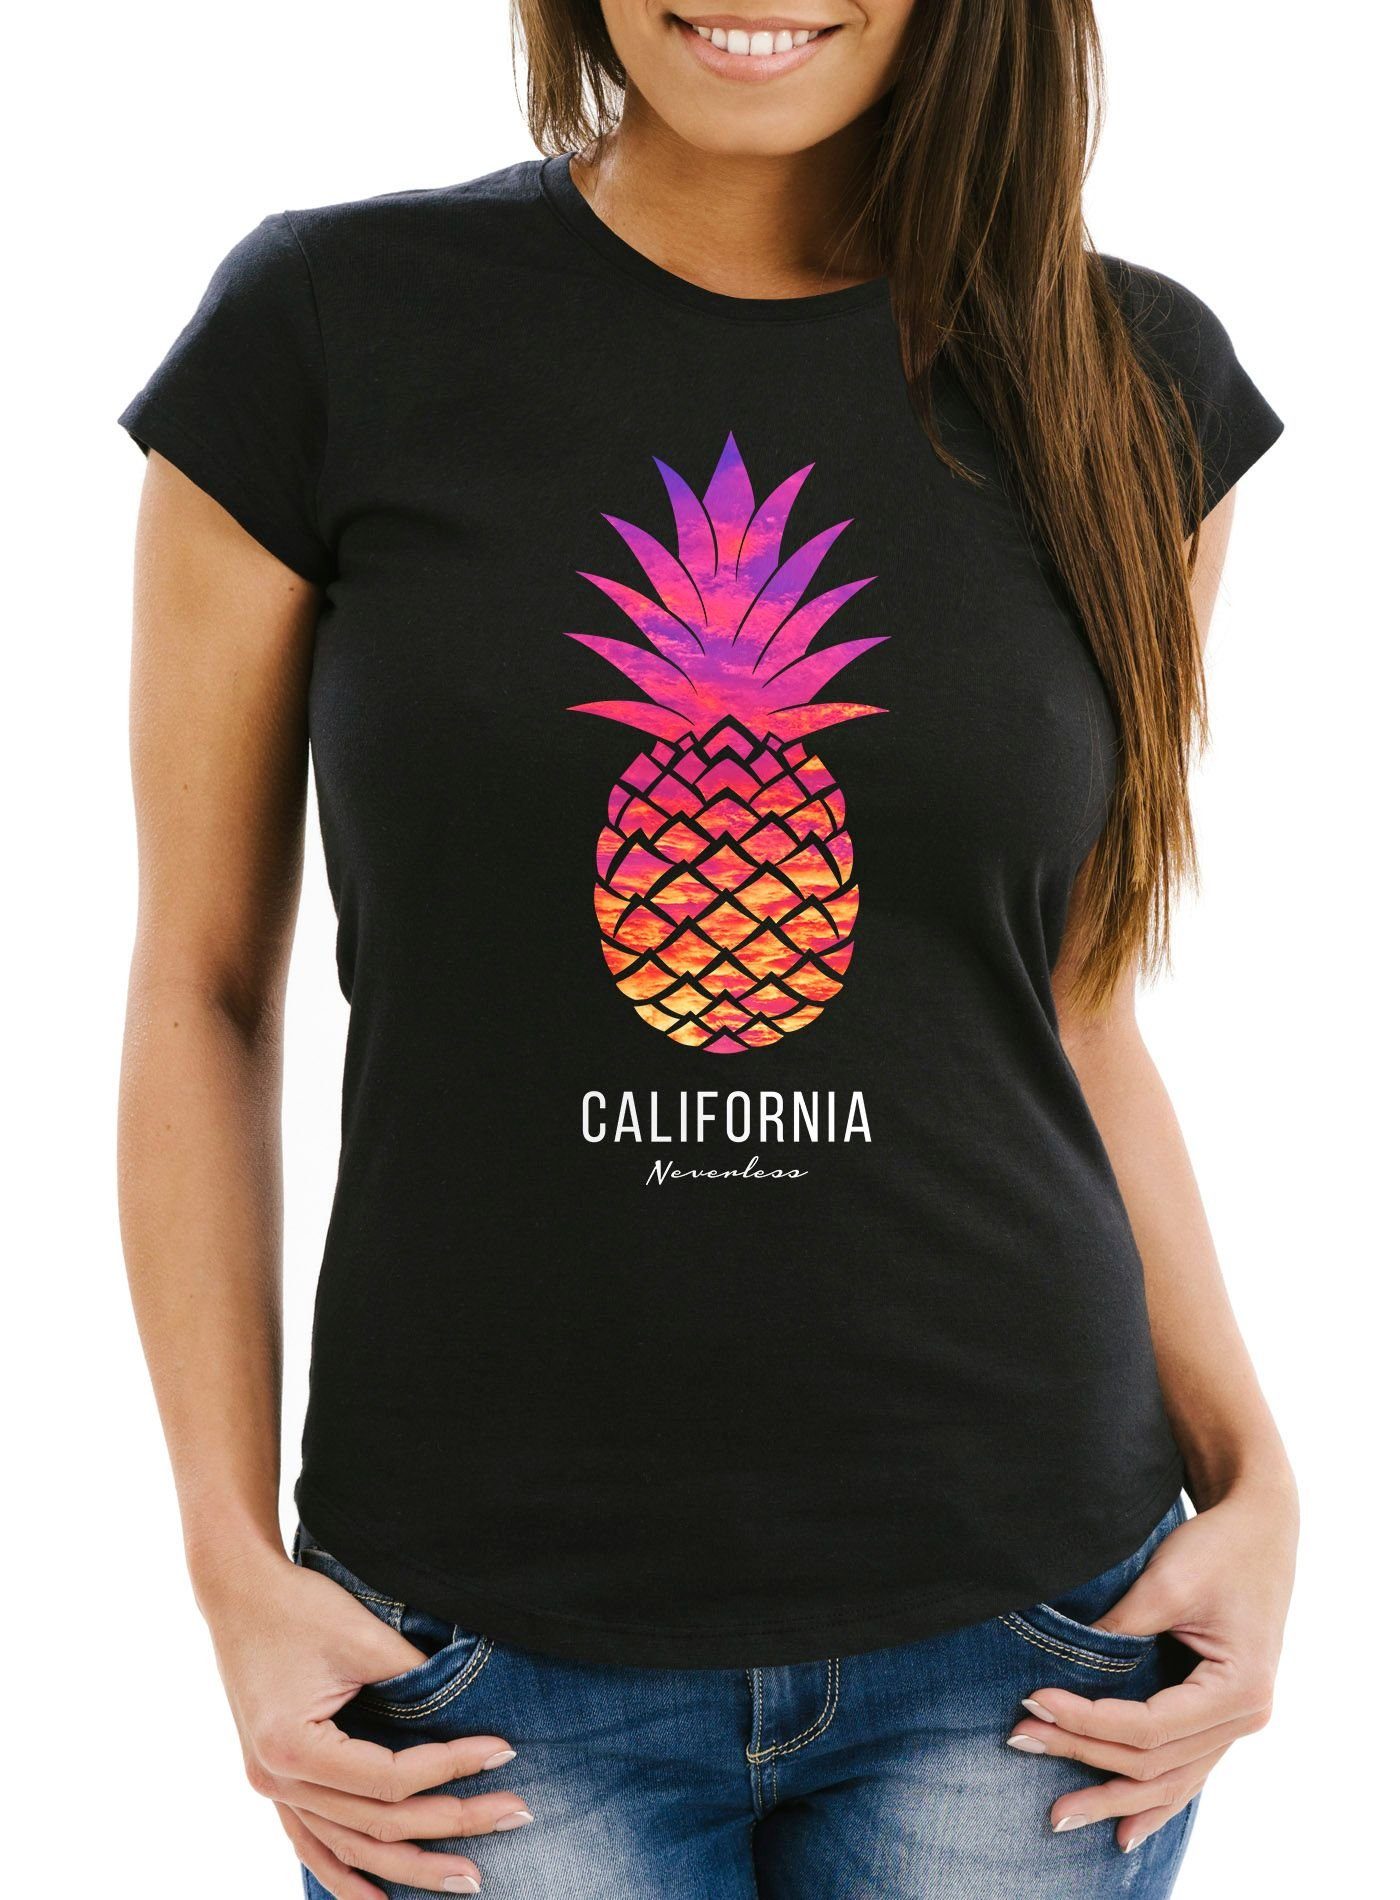 Neverless Print-Shirt »Damen T-Shirt Ananas Galaxy Galaxie Wasser Ozean  Slim Fit Neverless®« mit Print online kaufen | OTTO